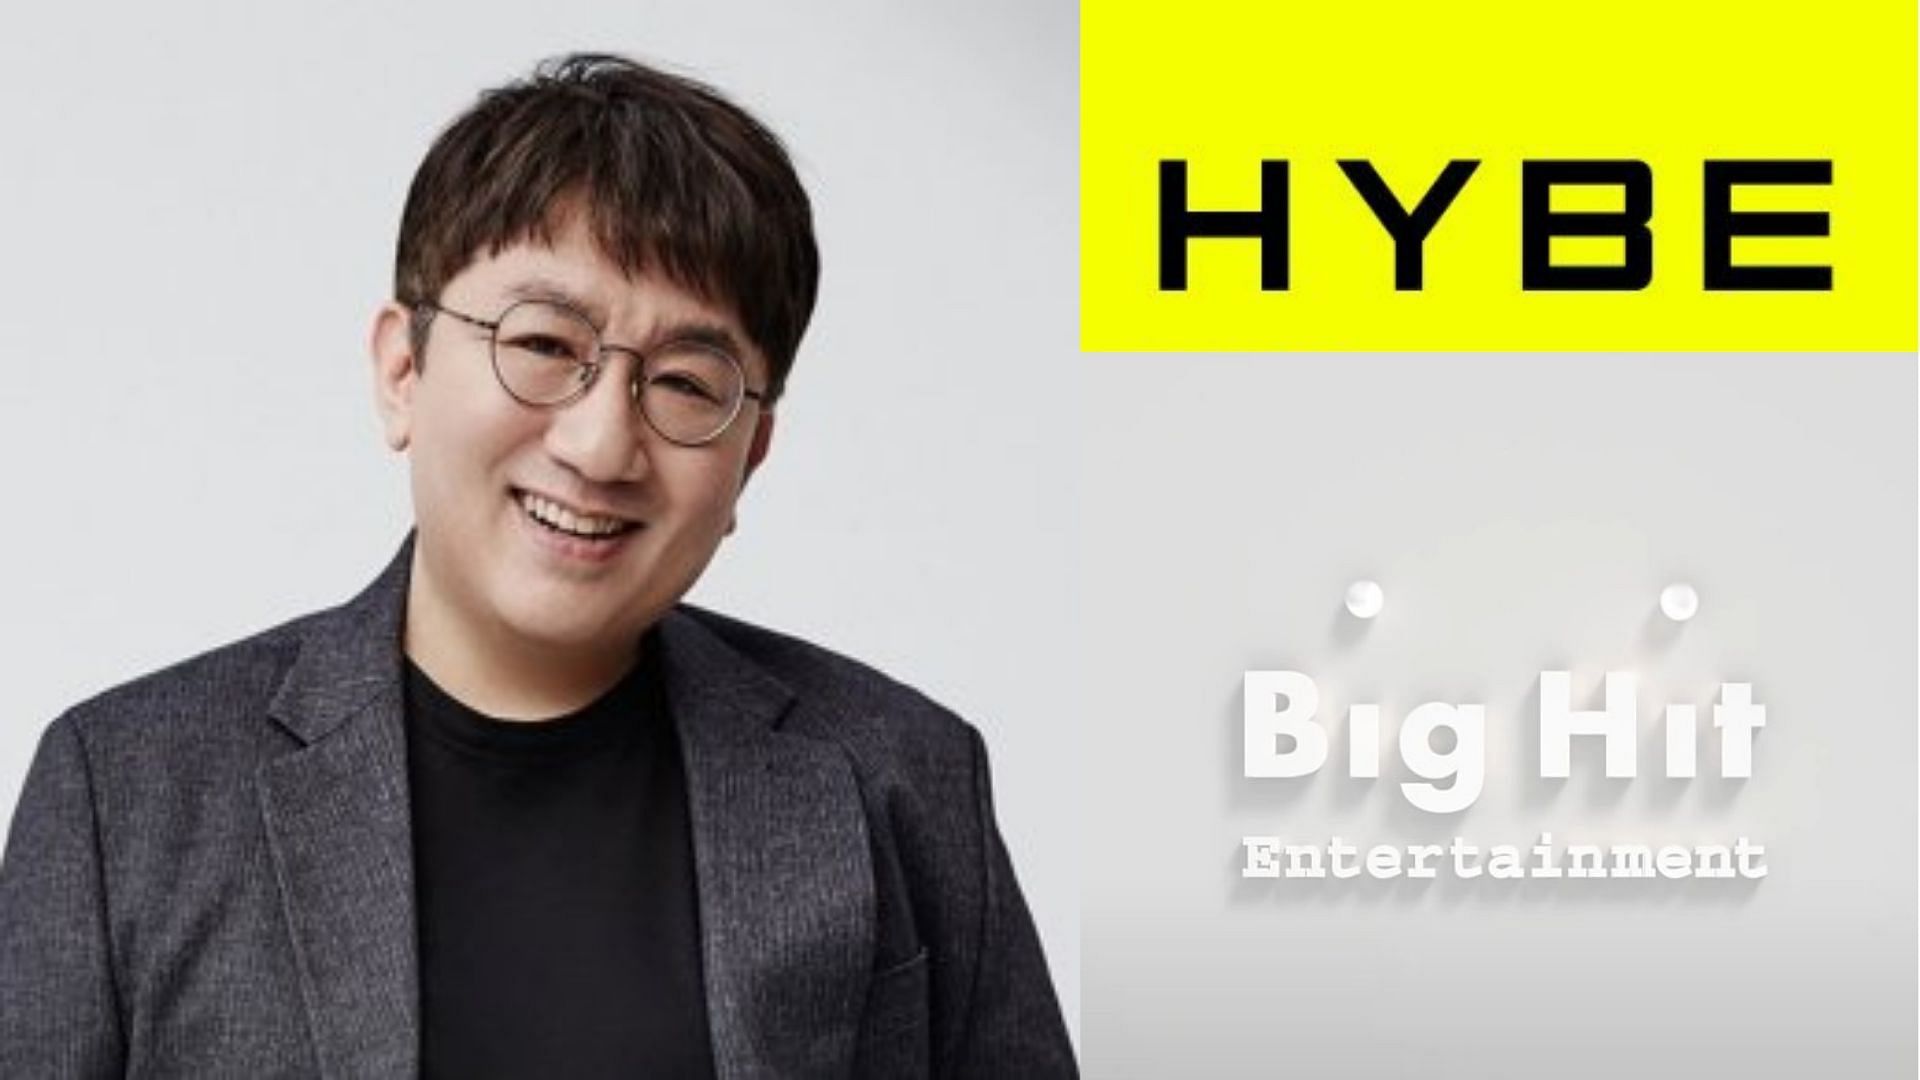 HYBE Chairman Bang Si-hyuk was rewarded for his work (Image via Sportskeeda)